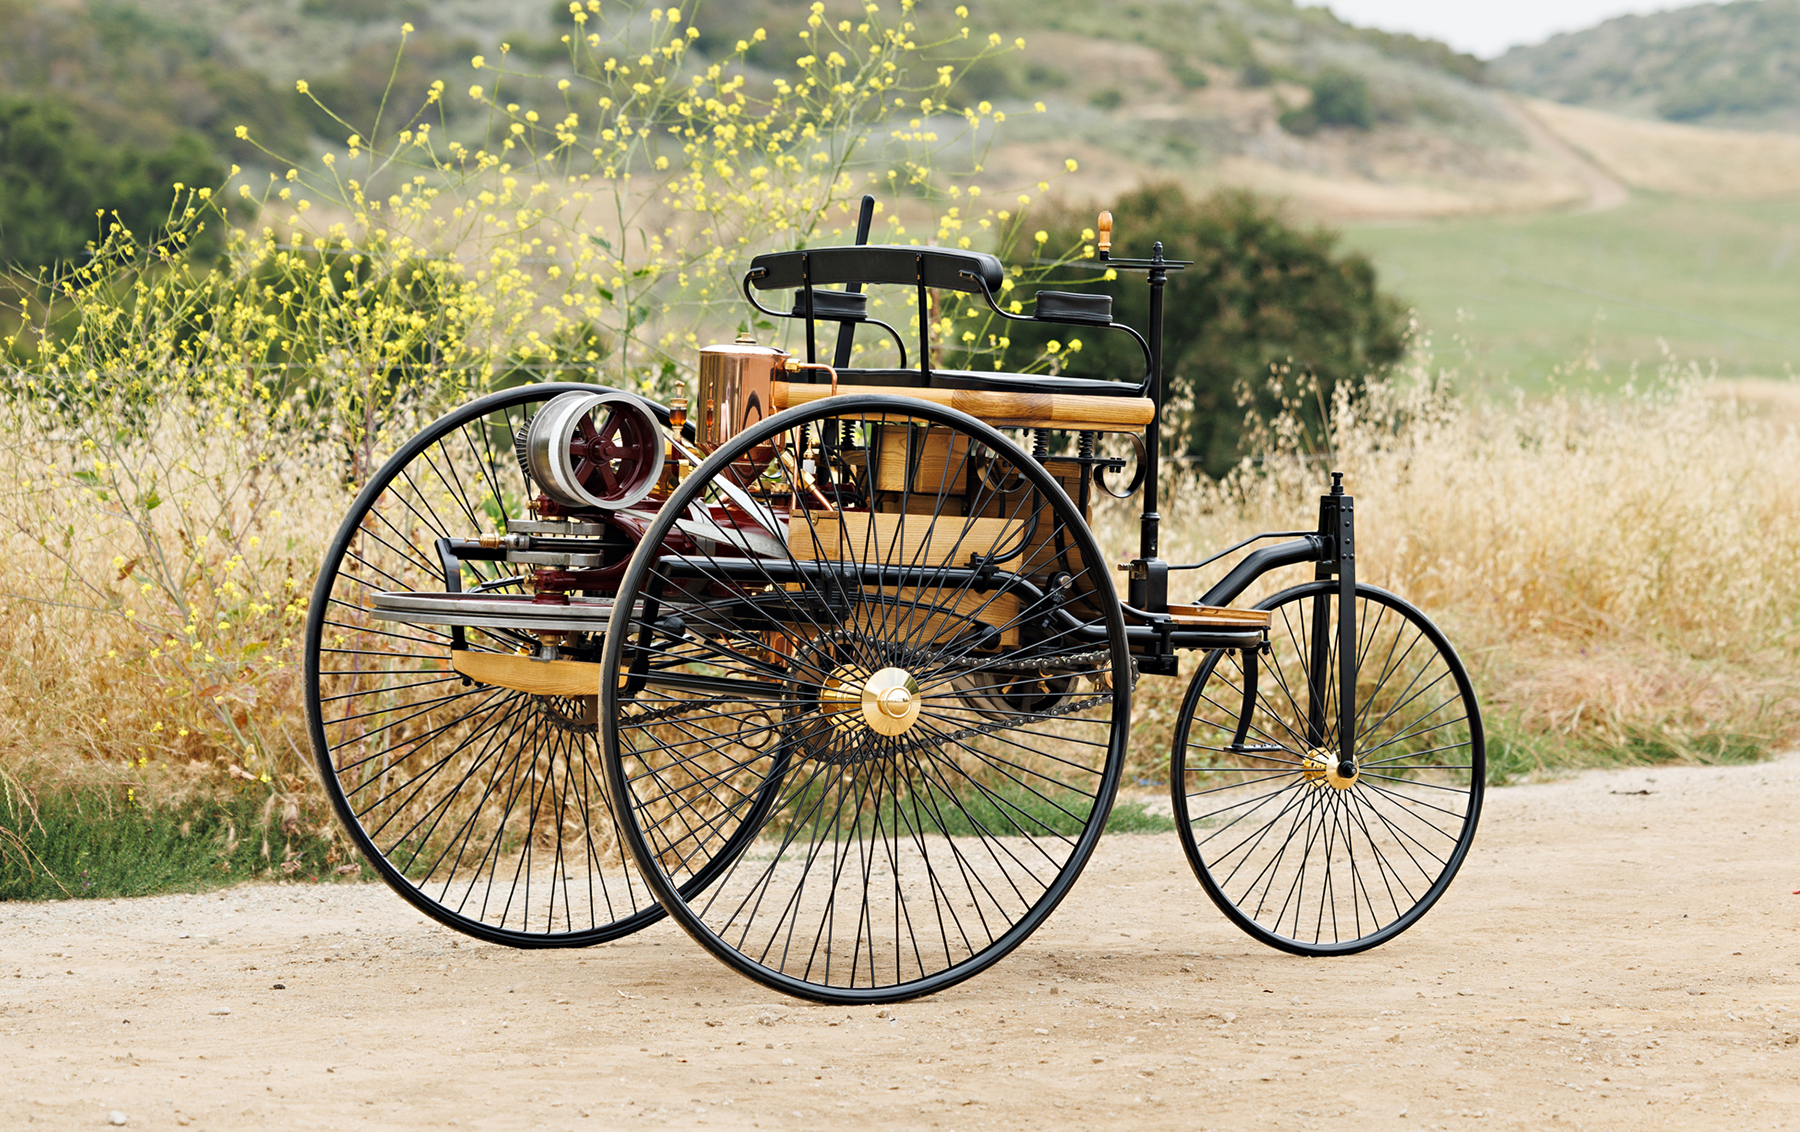 1886 Benz Patent-Motorwagen Replica | Gooding & Company